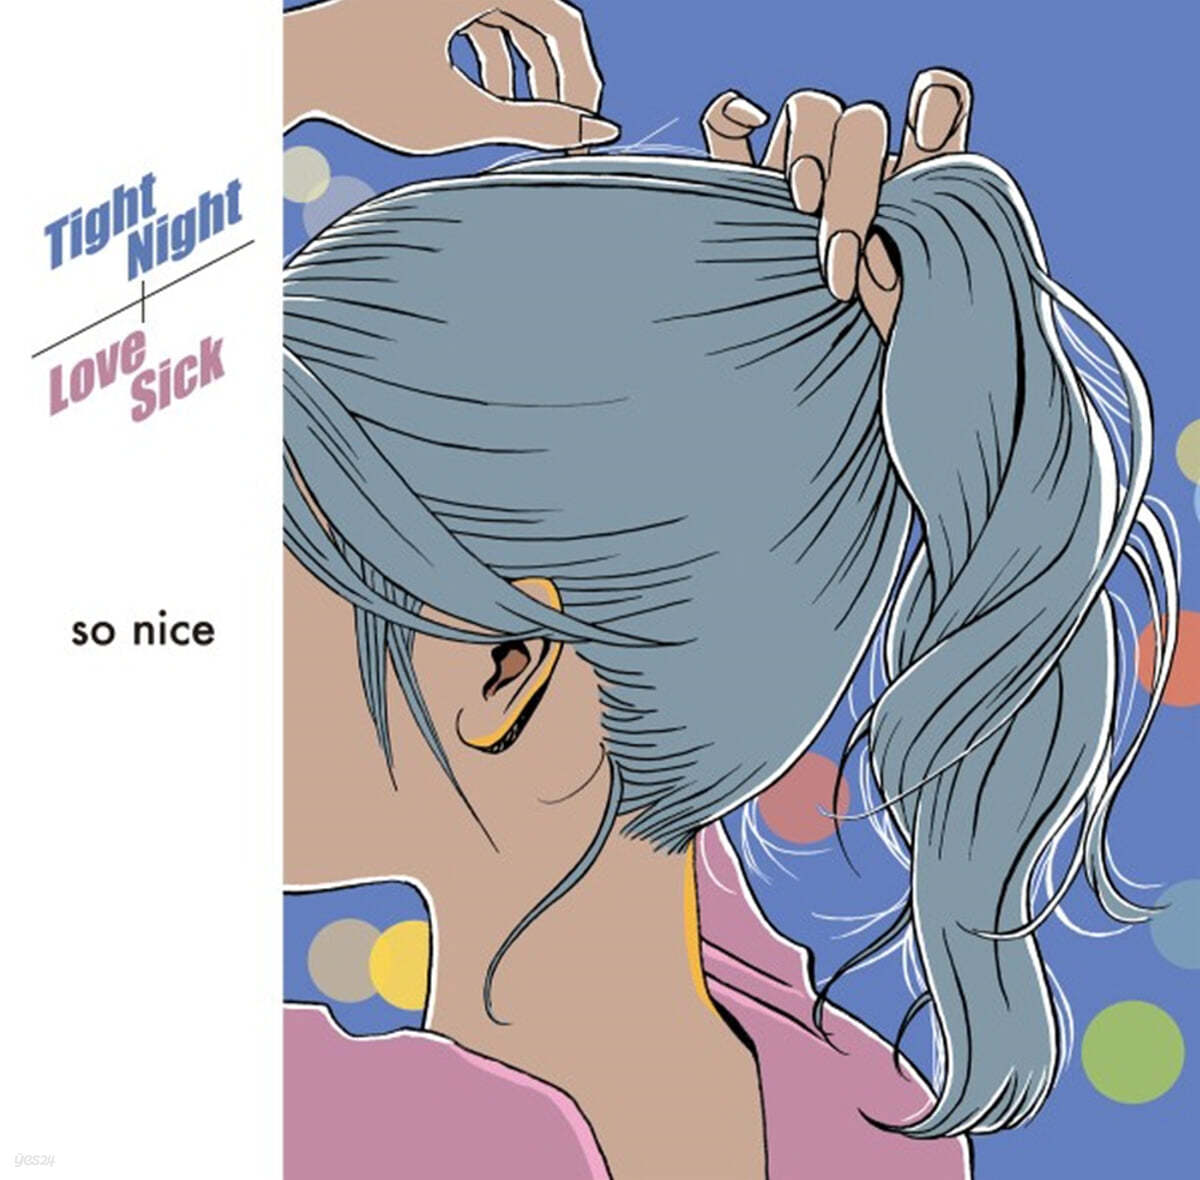 So Nice (소 나이스) - Tight Night / Love Sick [7인치 Vinyl] 